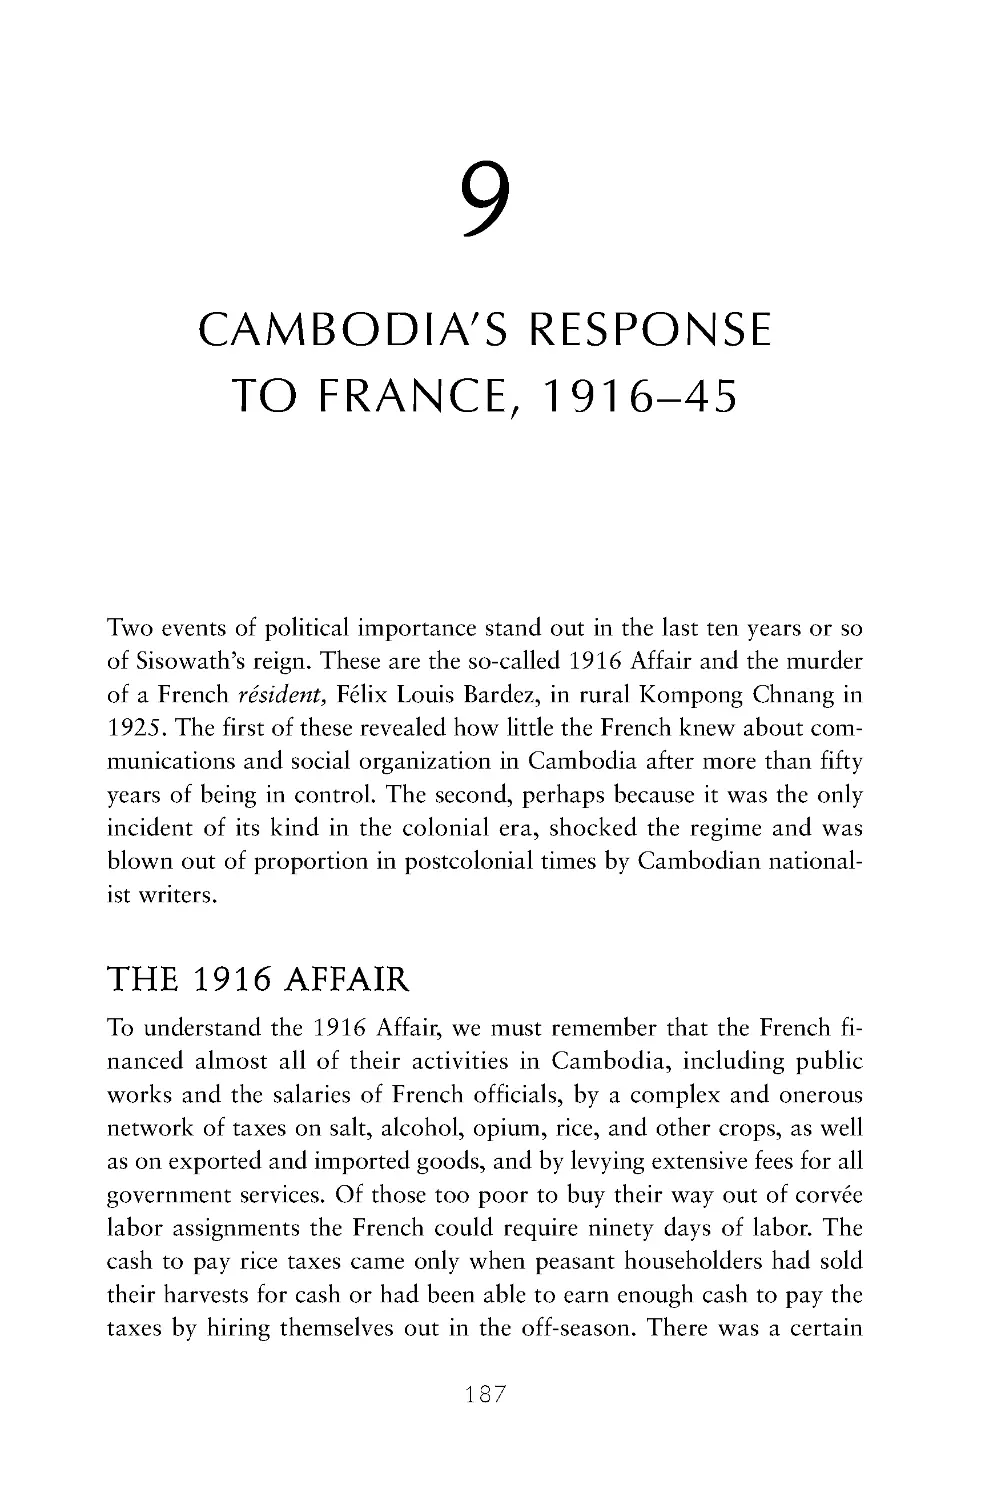 9. Cambodia's Response to France, 1916-45